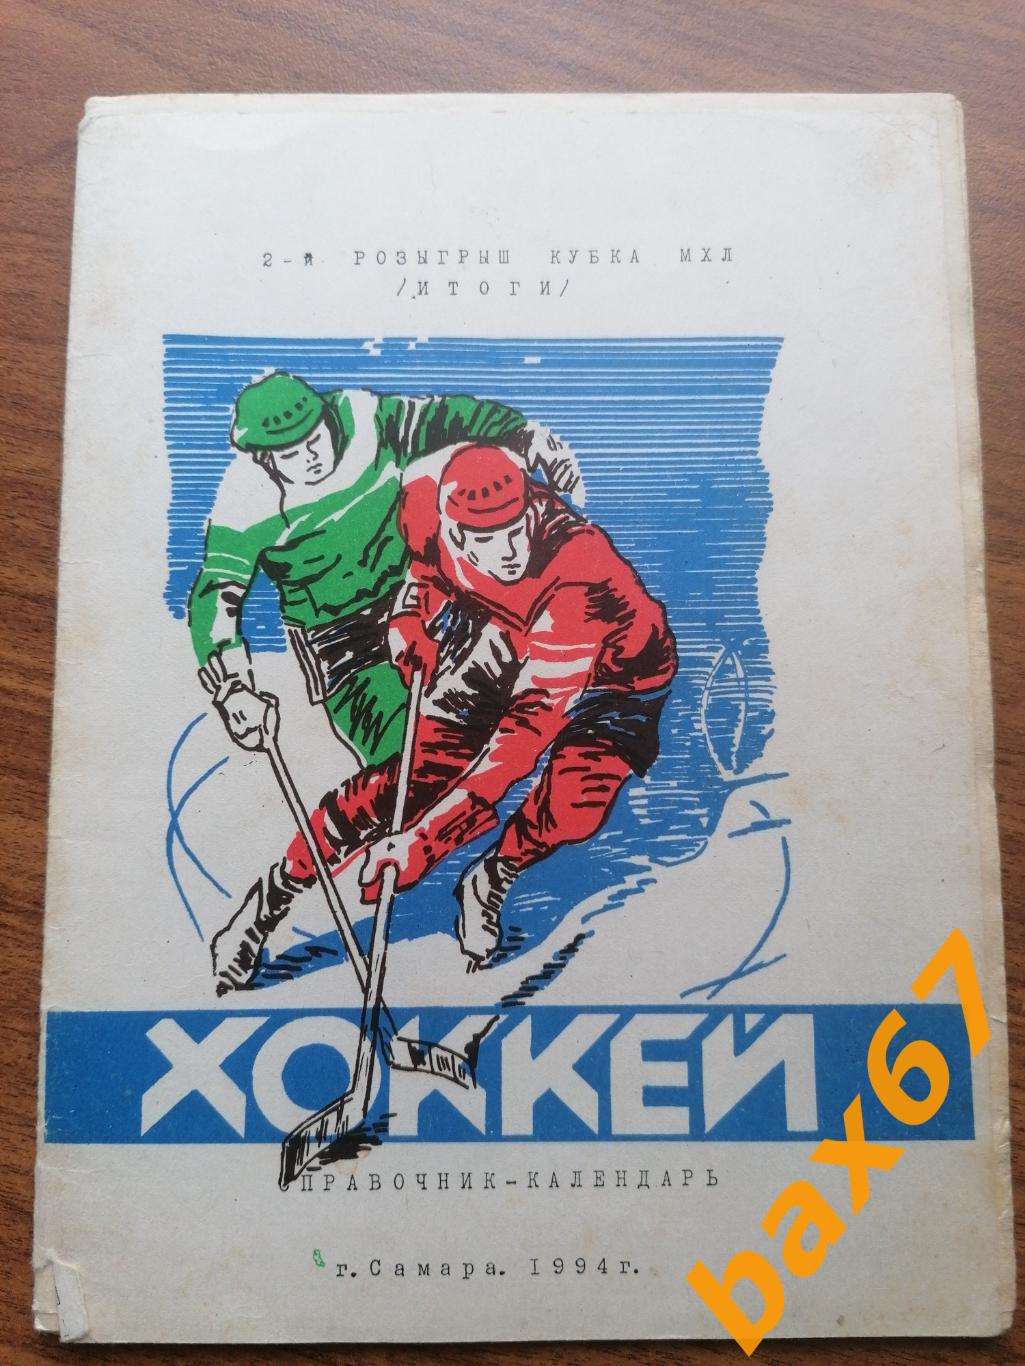 Хоккей Самара 1994, итоги Кубка мхл